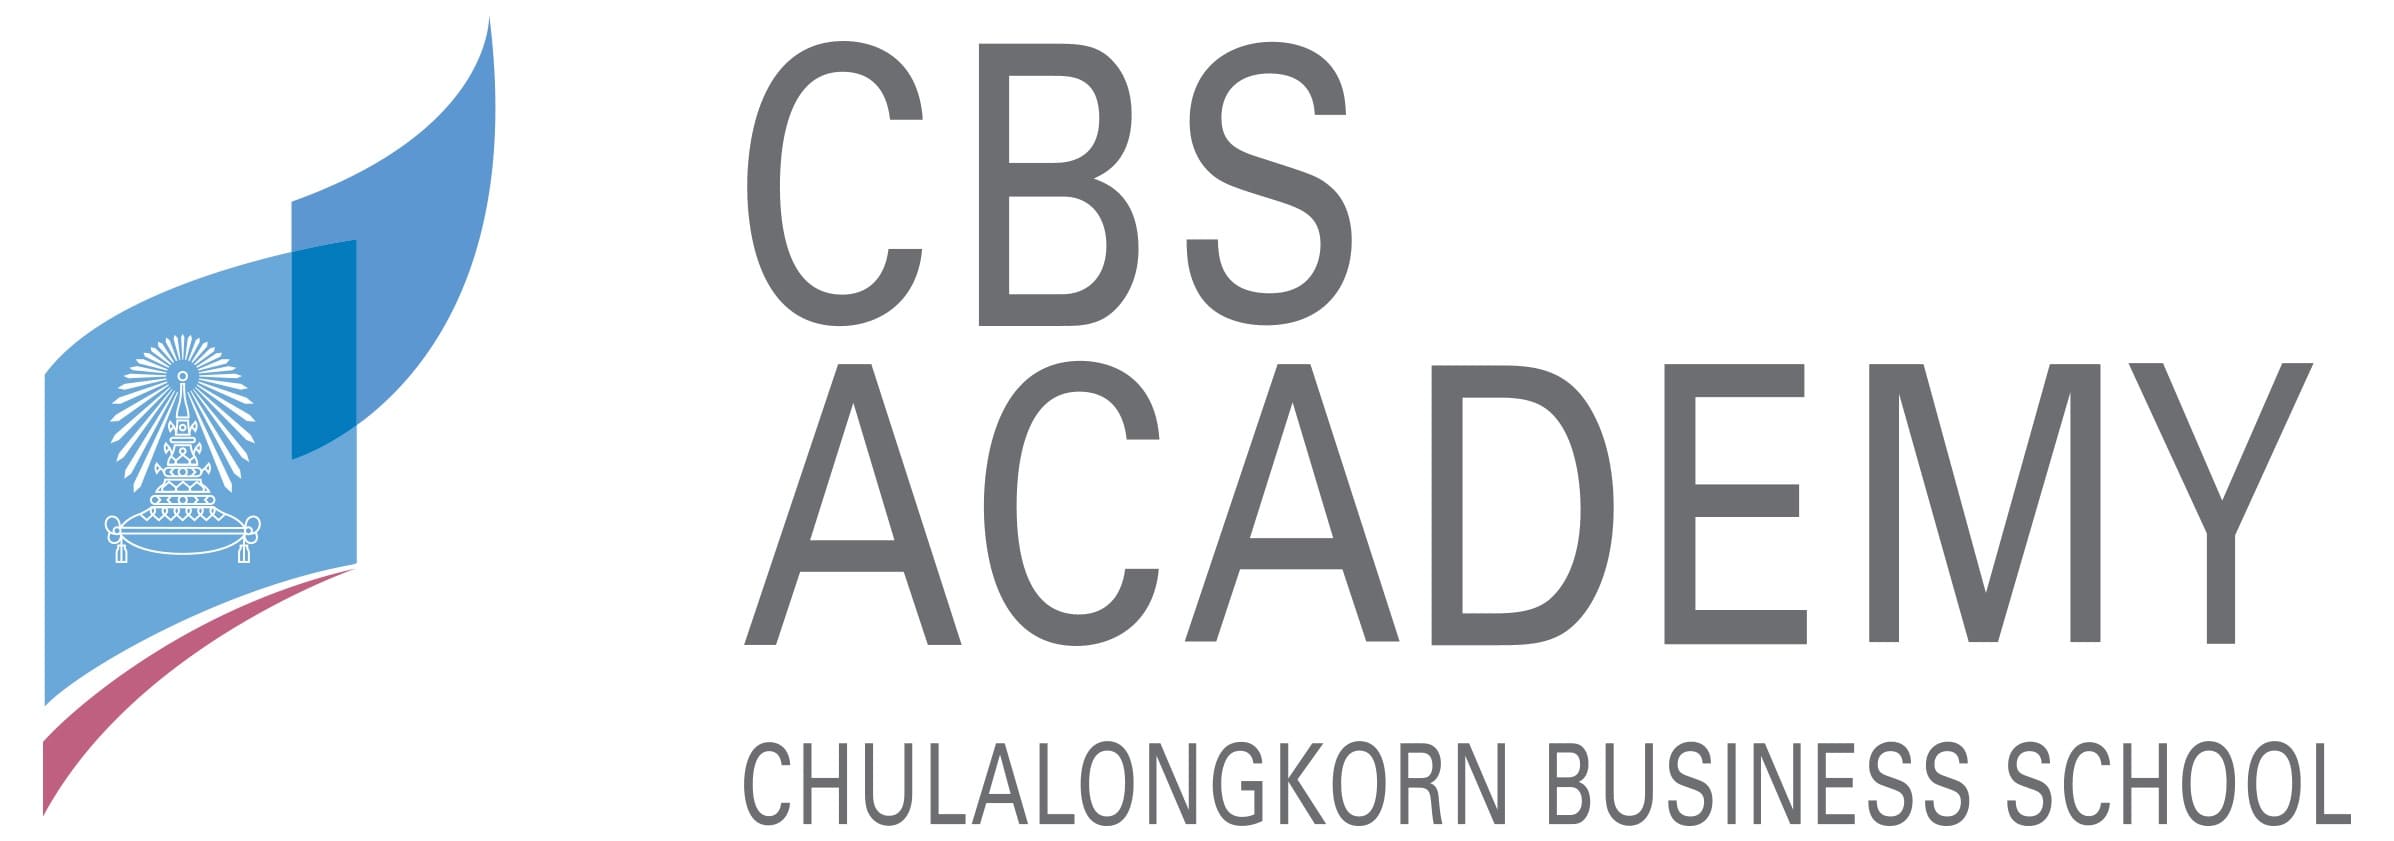 CBS Academy คณะบัญชีฯ จุฬาฯ